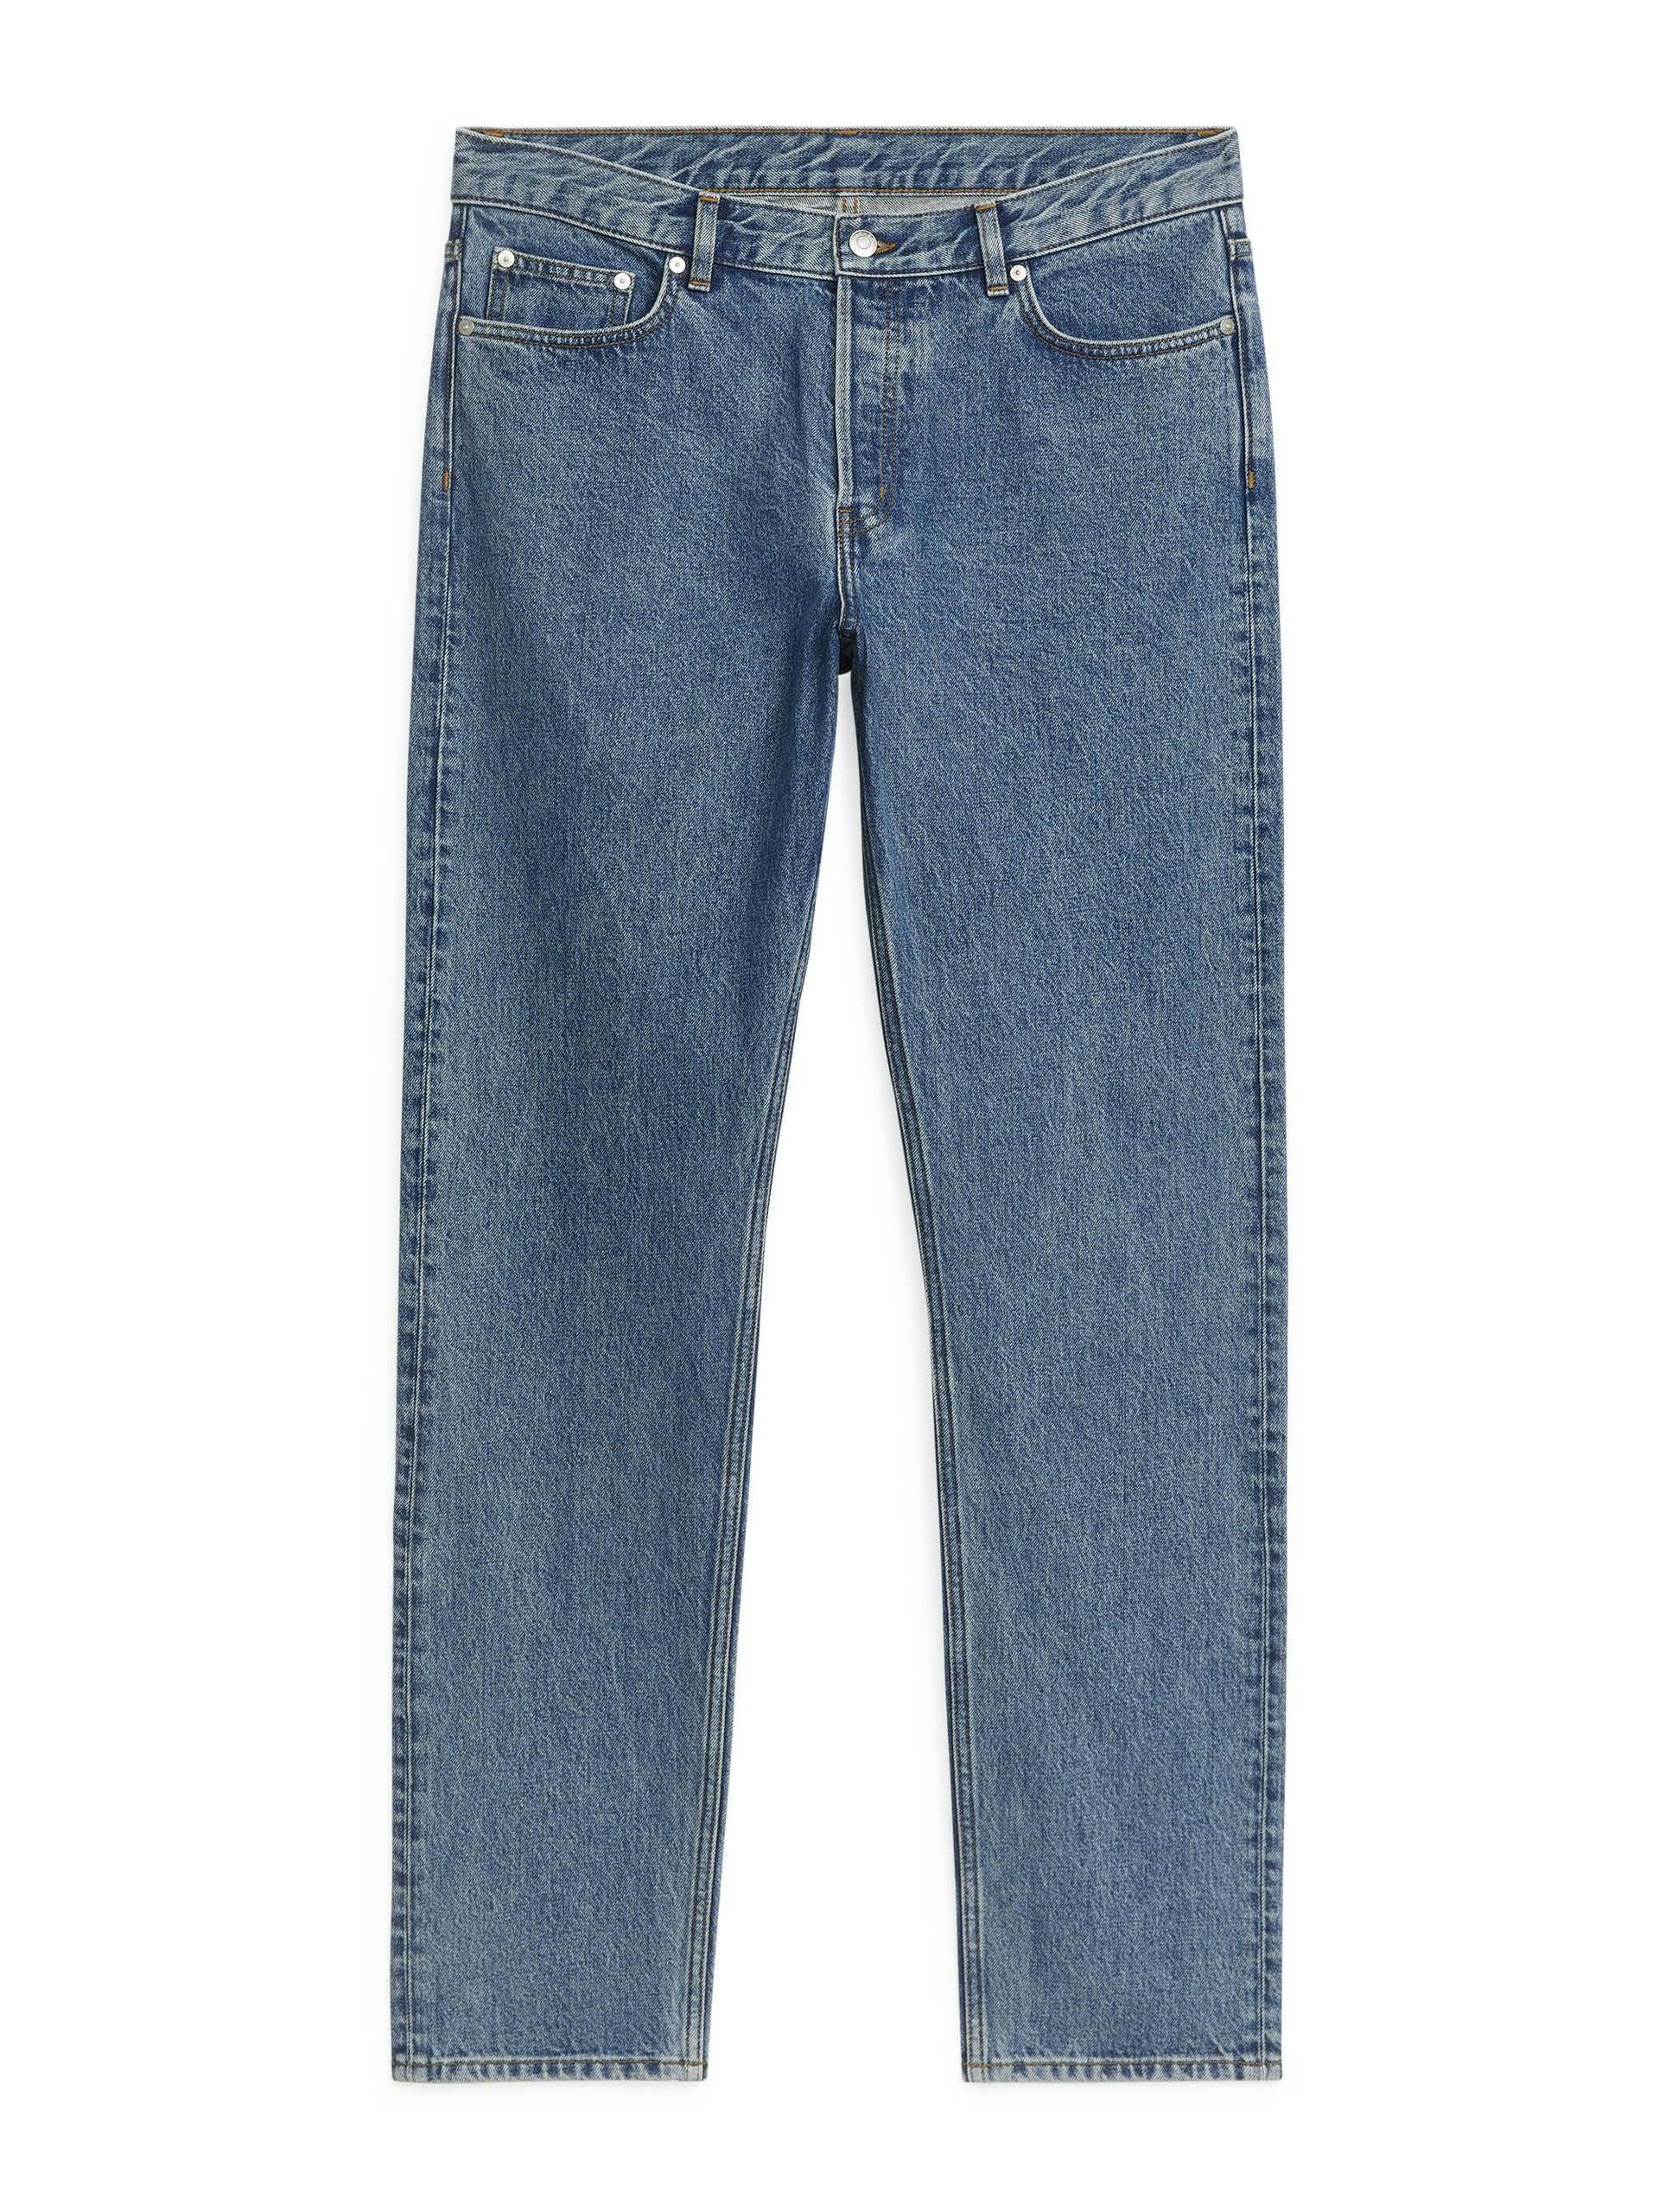 Cropped denim jeans